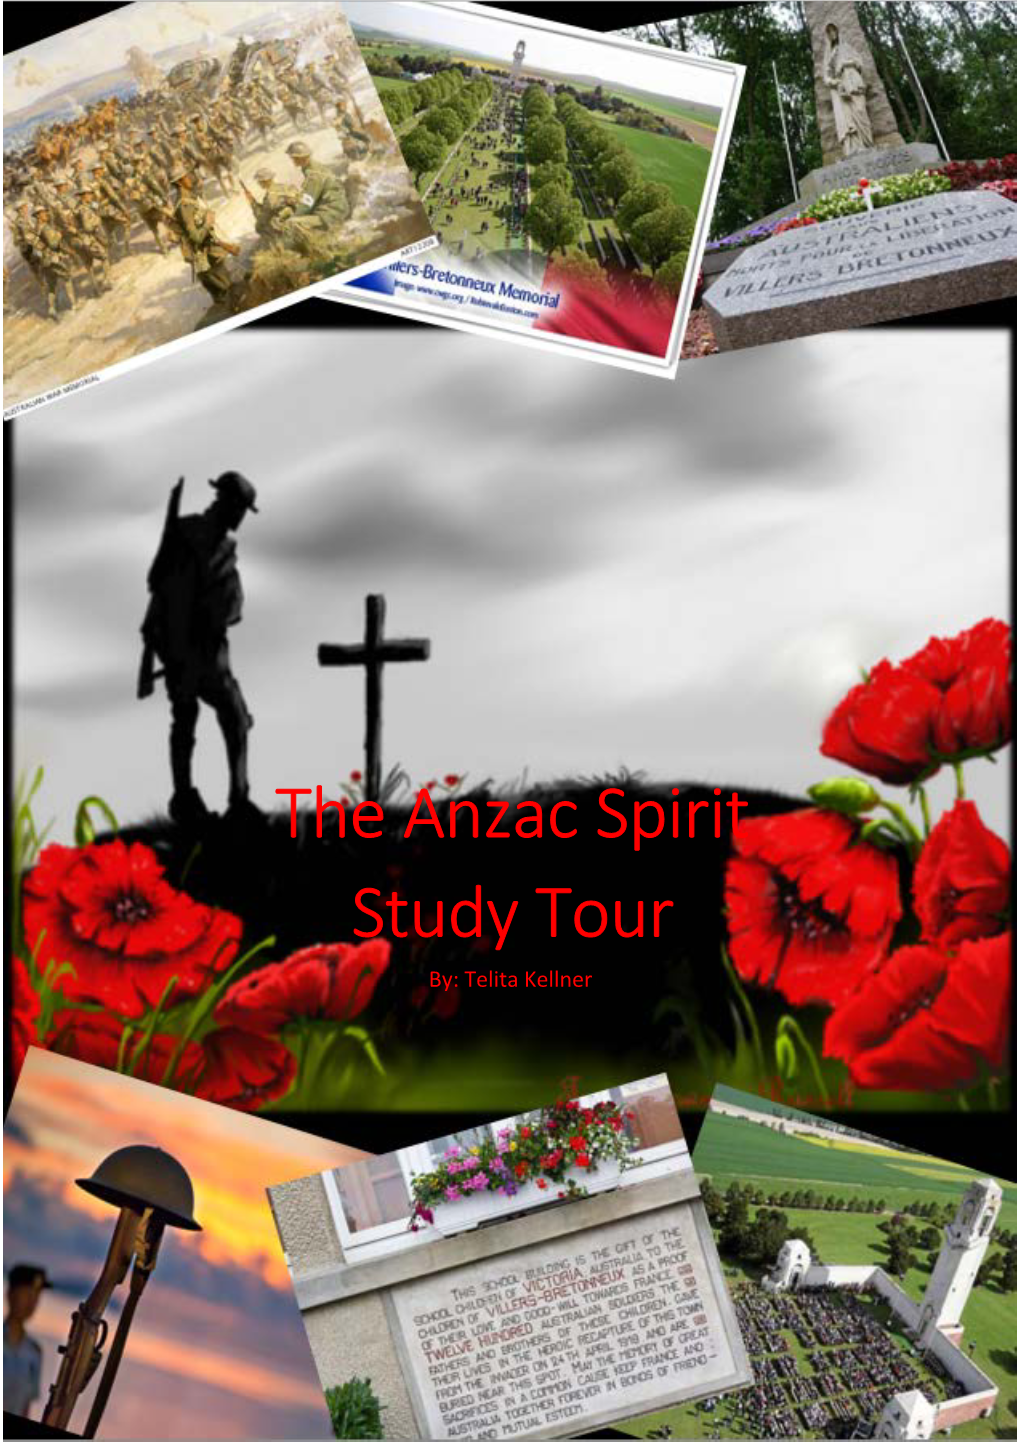 The Anzac Spirit Study Tour